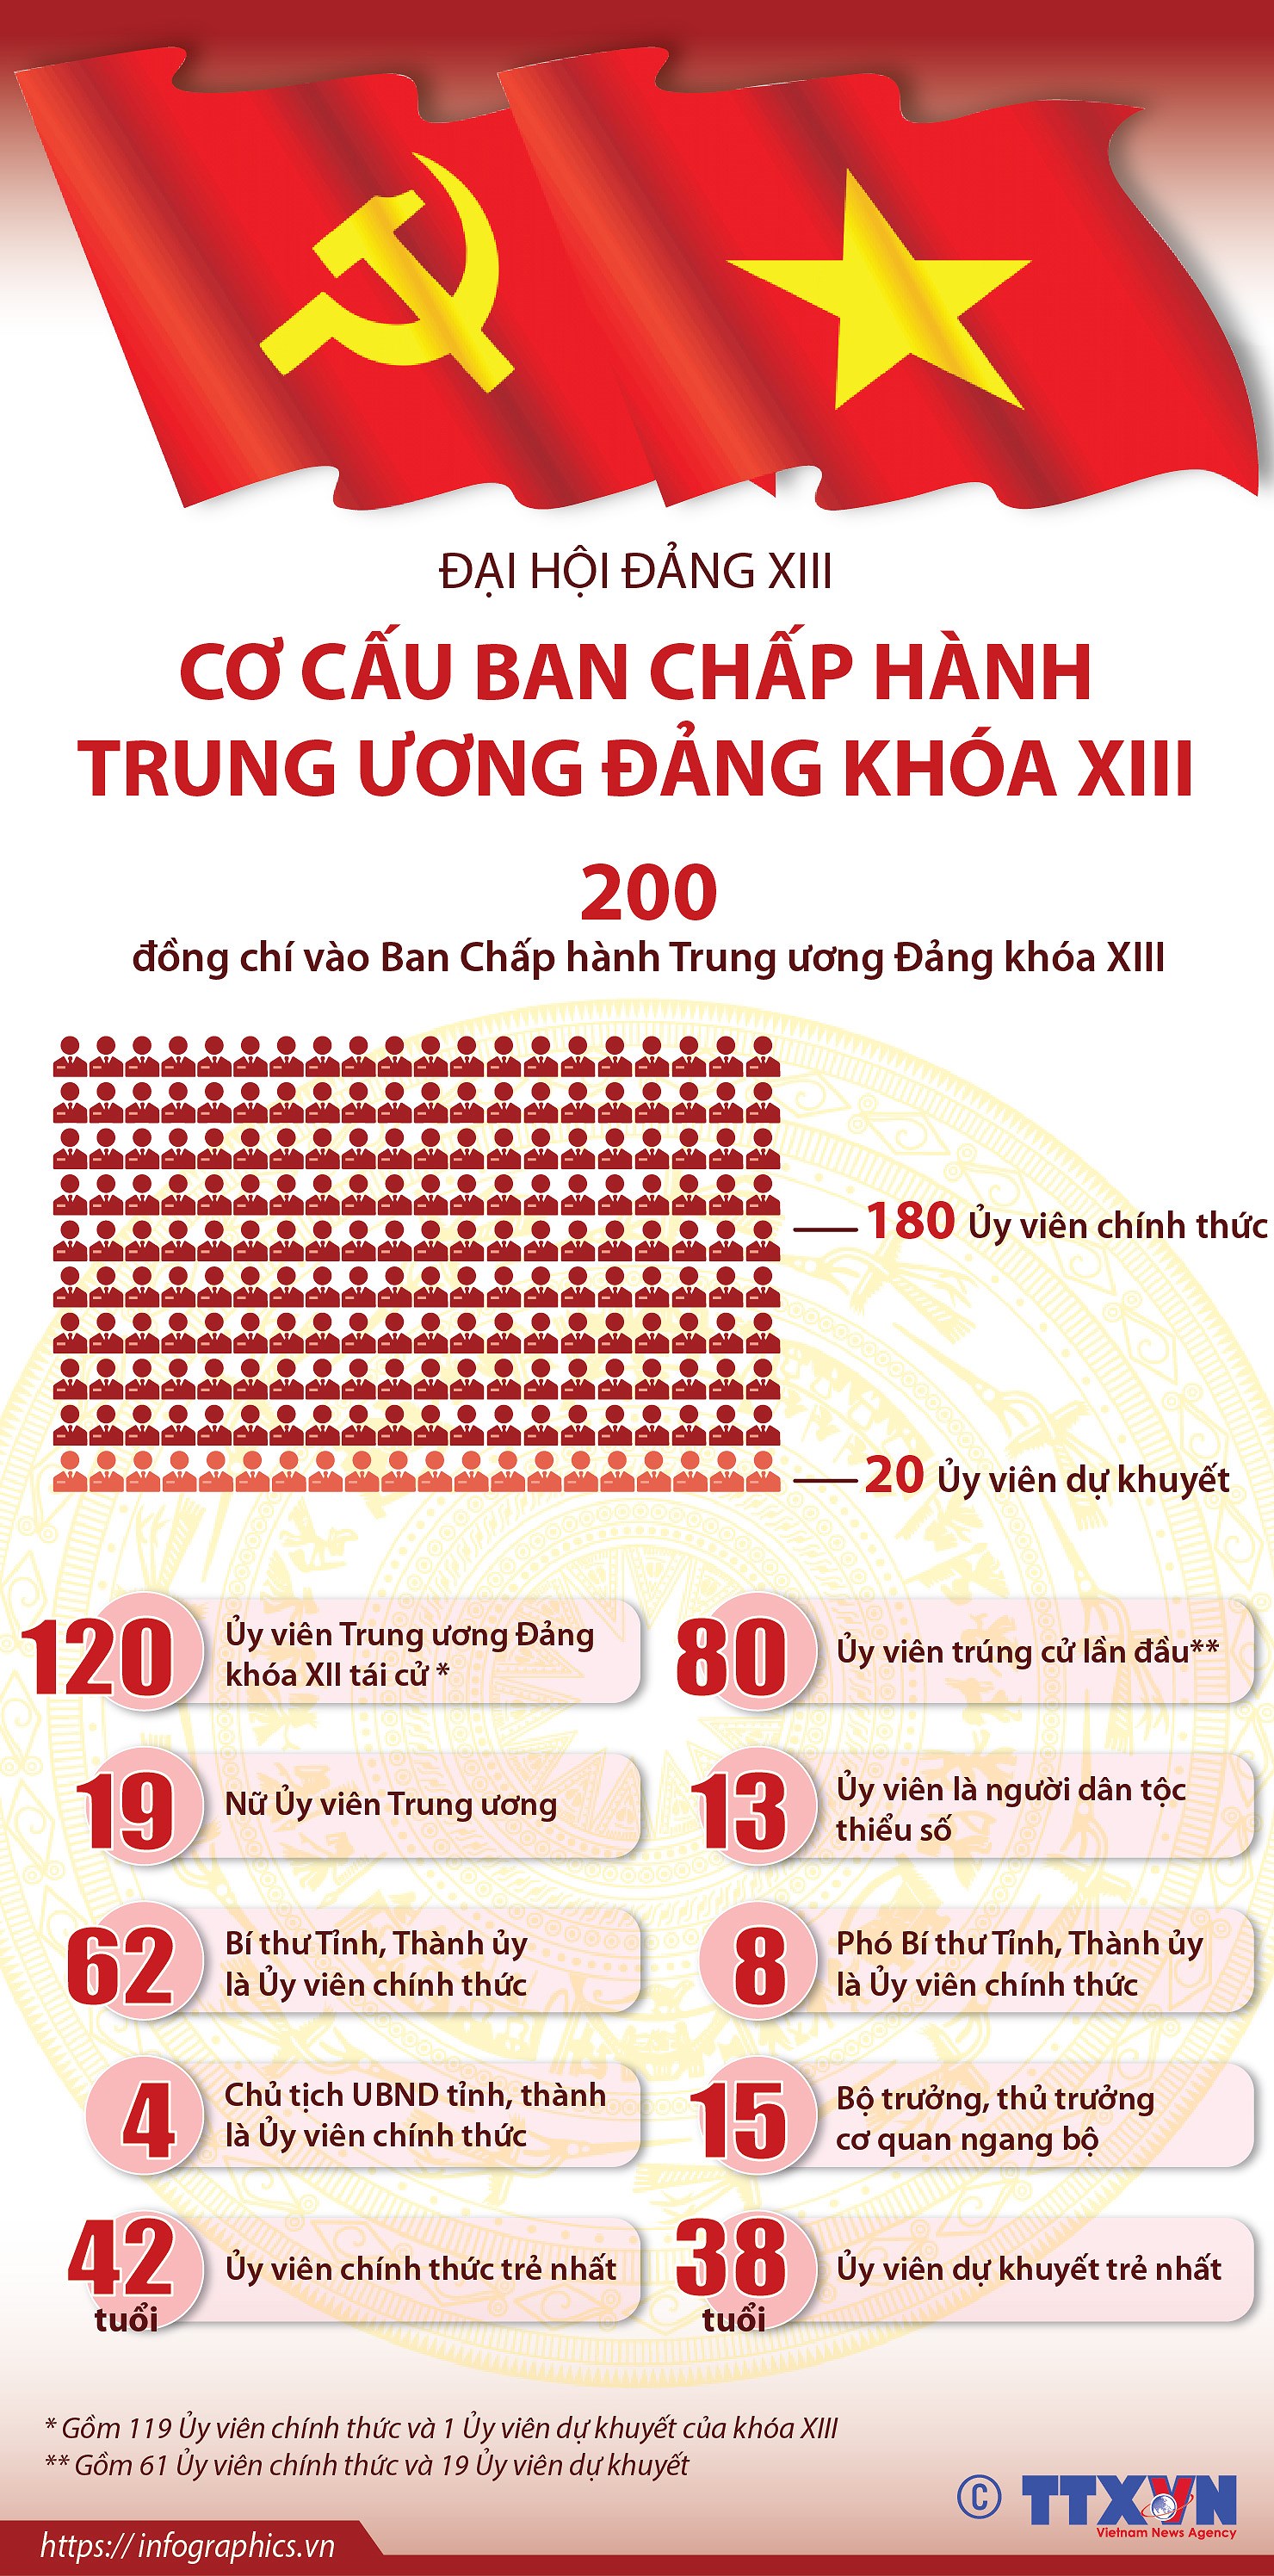 [Infographics] Co cau Ban Chap hanh Trung uong Dang khoa XIII hinh anh 1